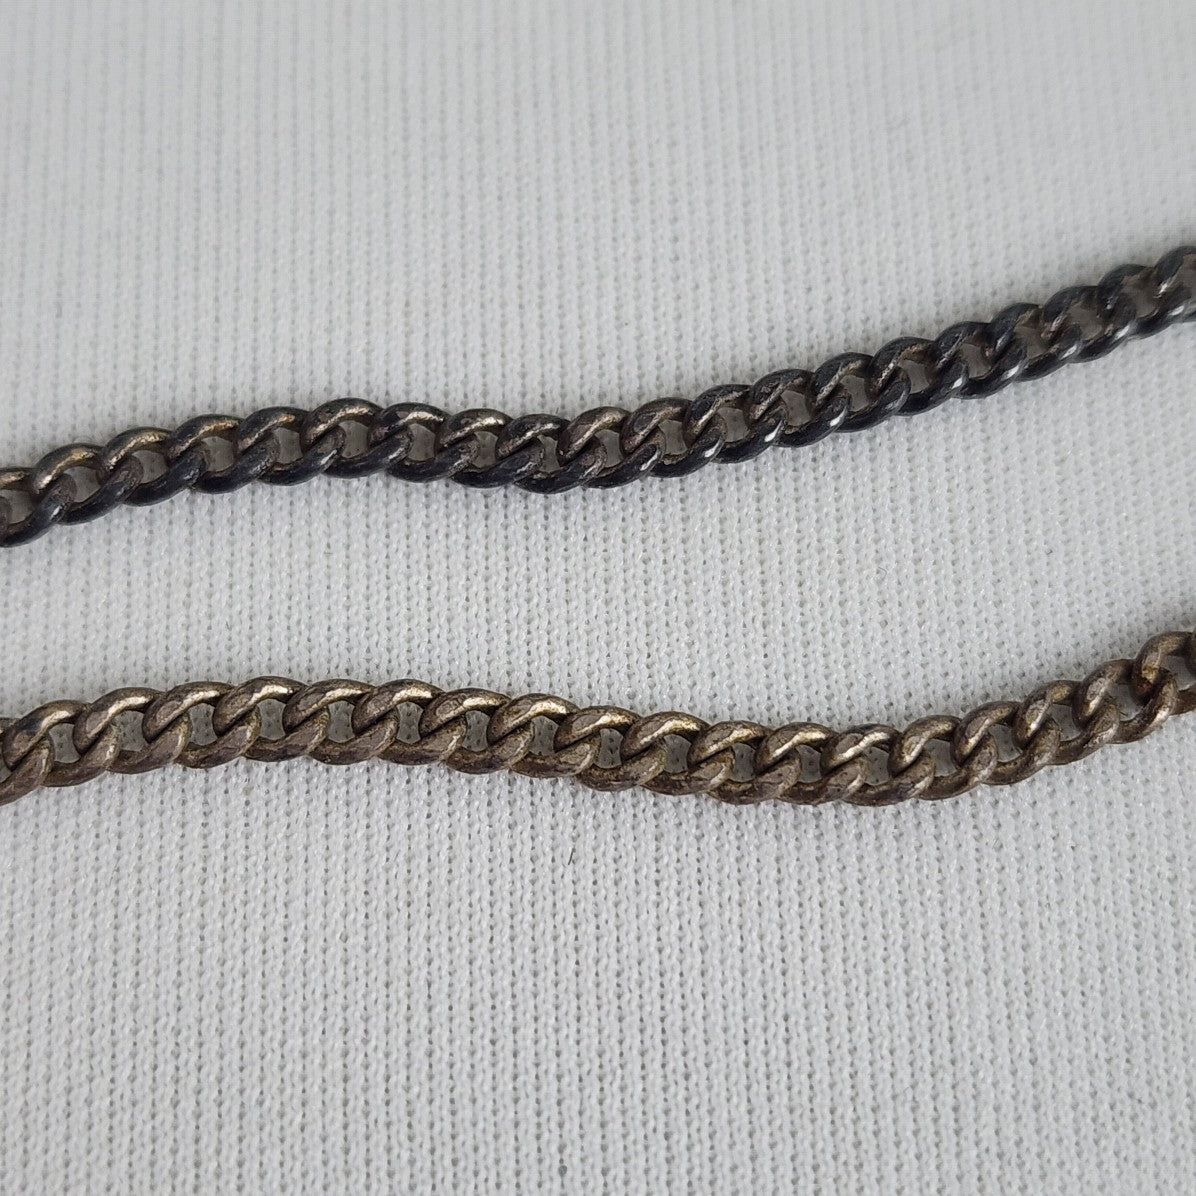 Vintage Silver Tone Black Petrified Wood Pendant Necklace